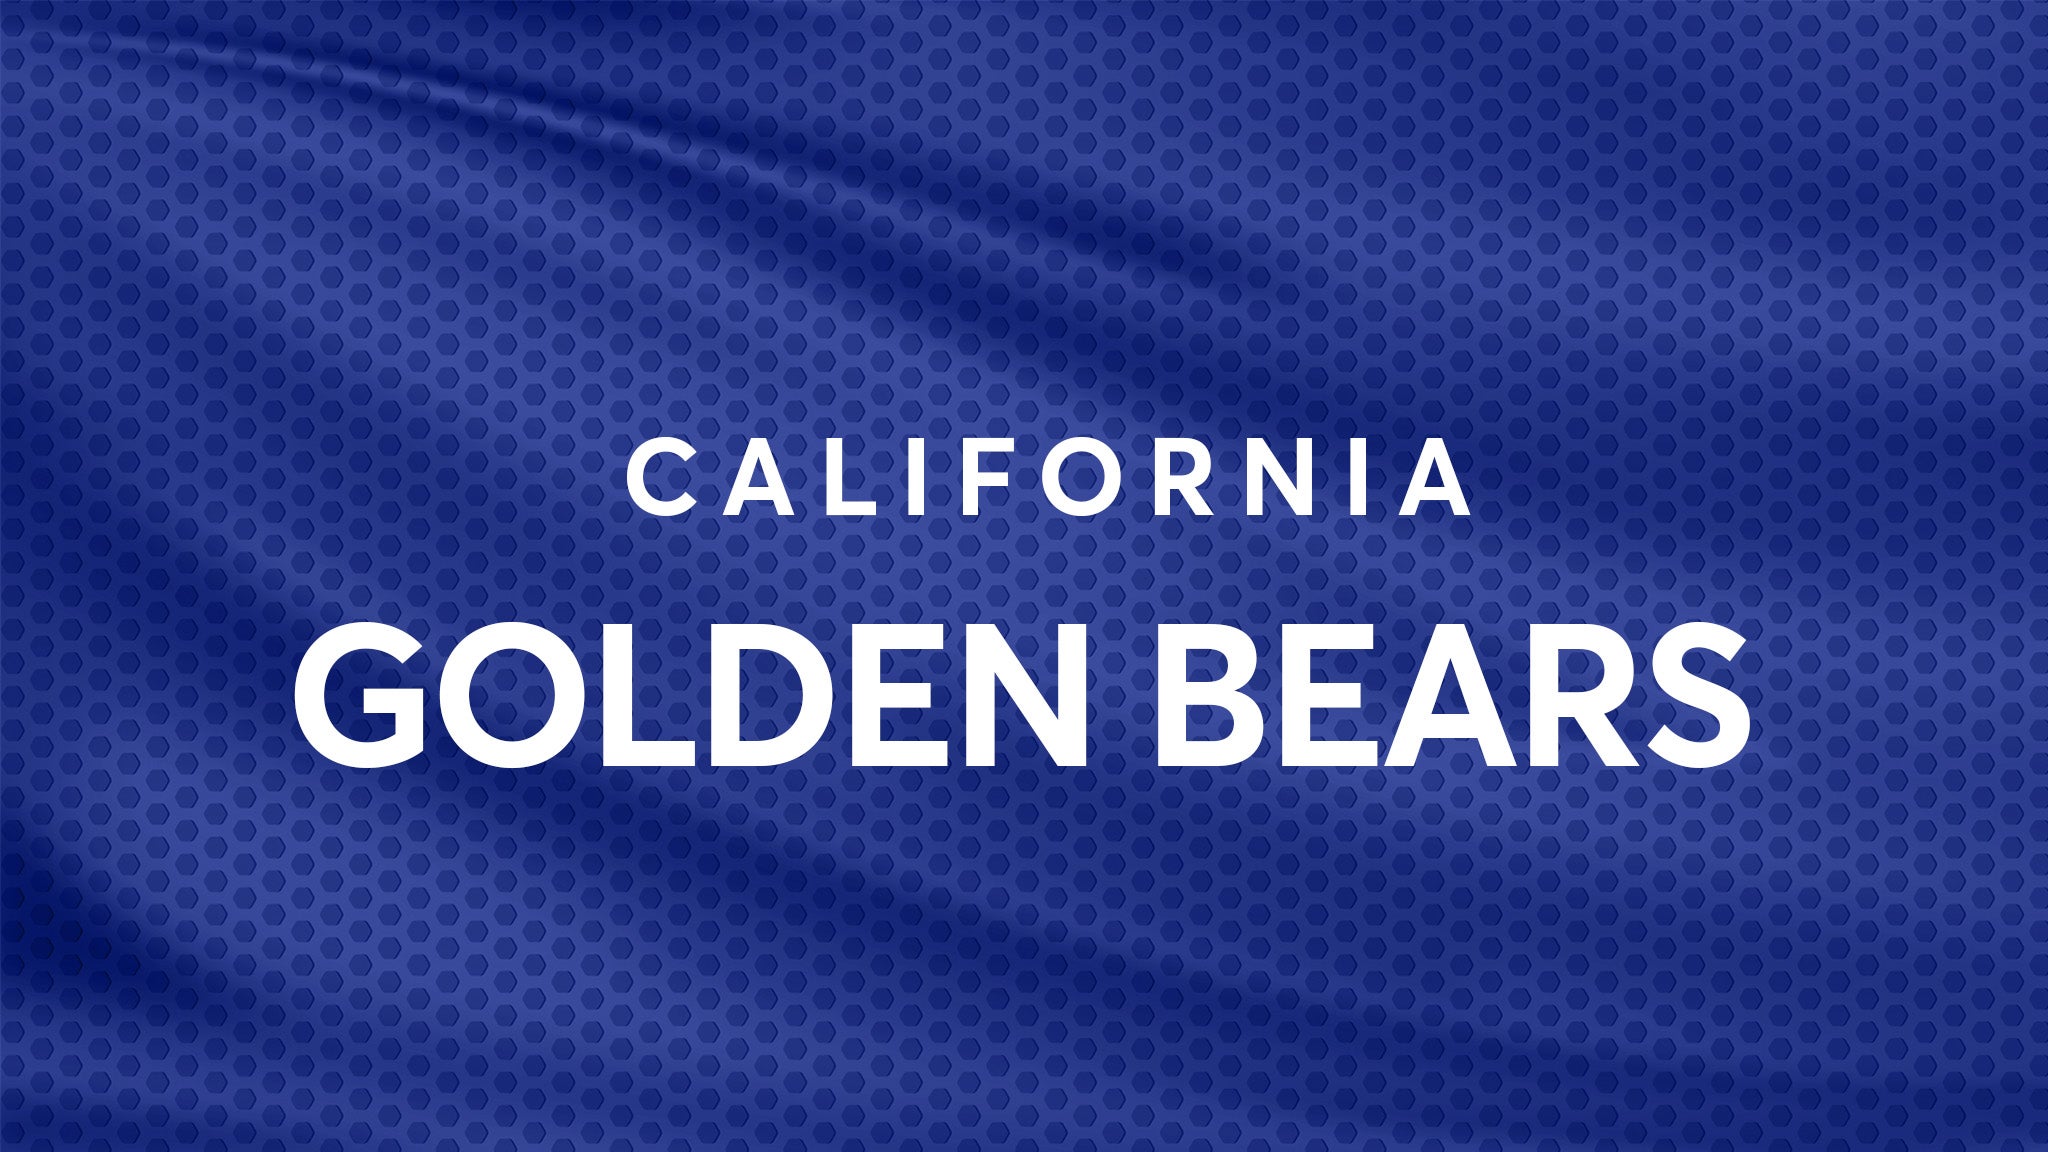 California Golden Bears Football vs. Miami Hurricanes Football hero